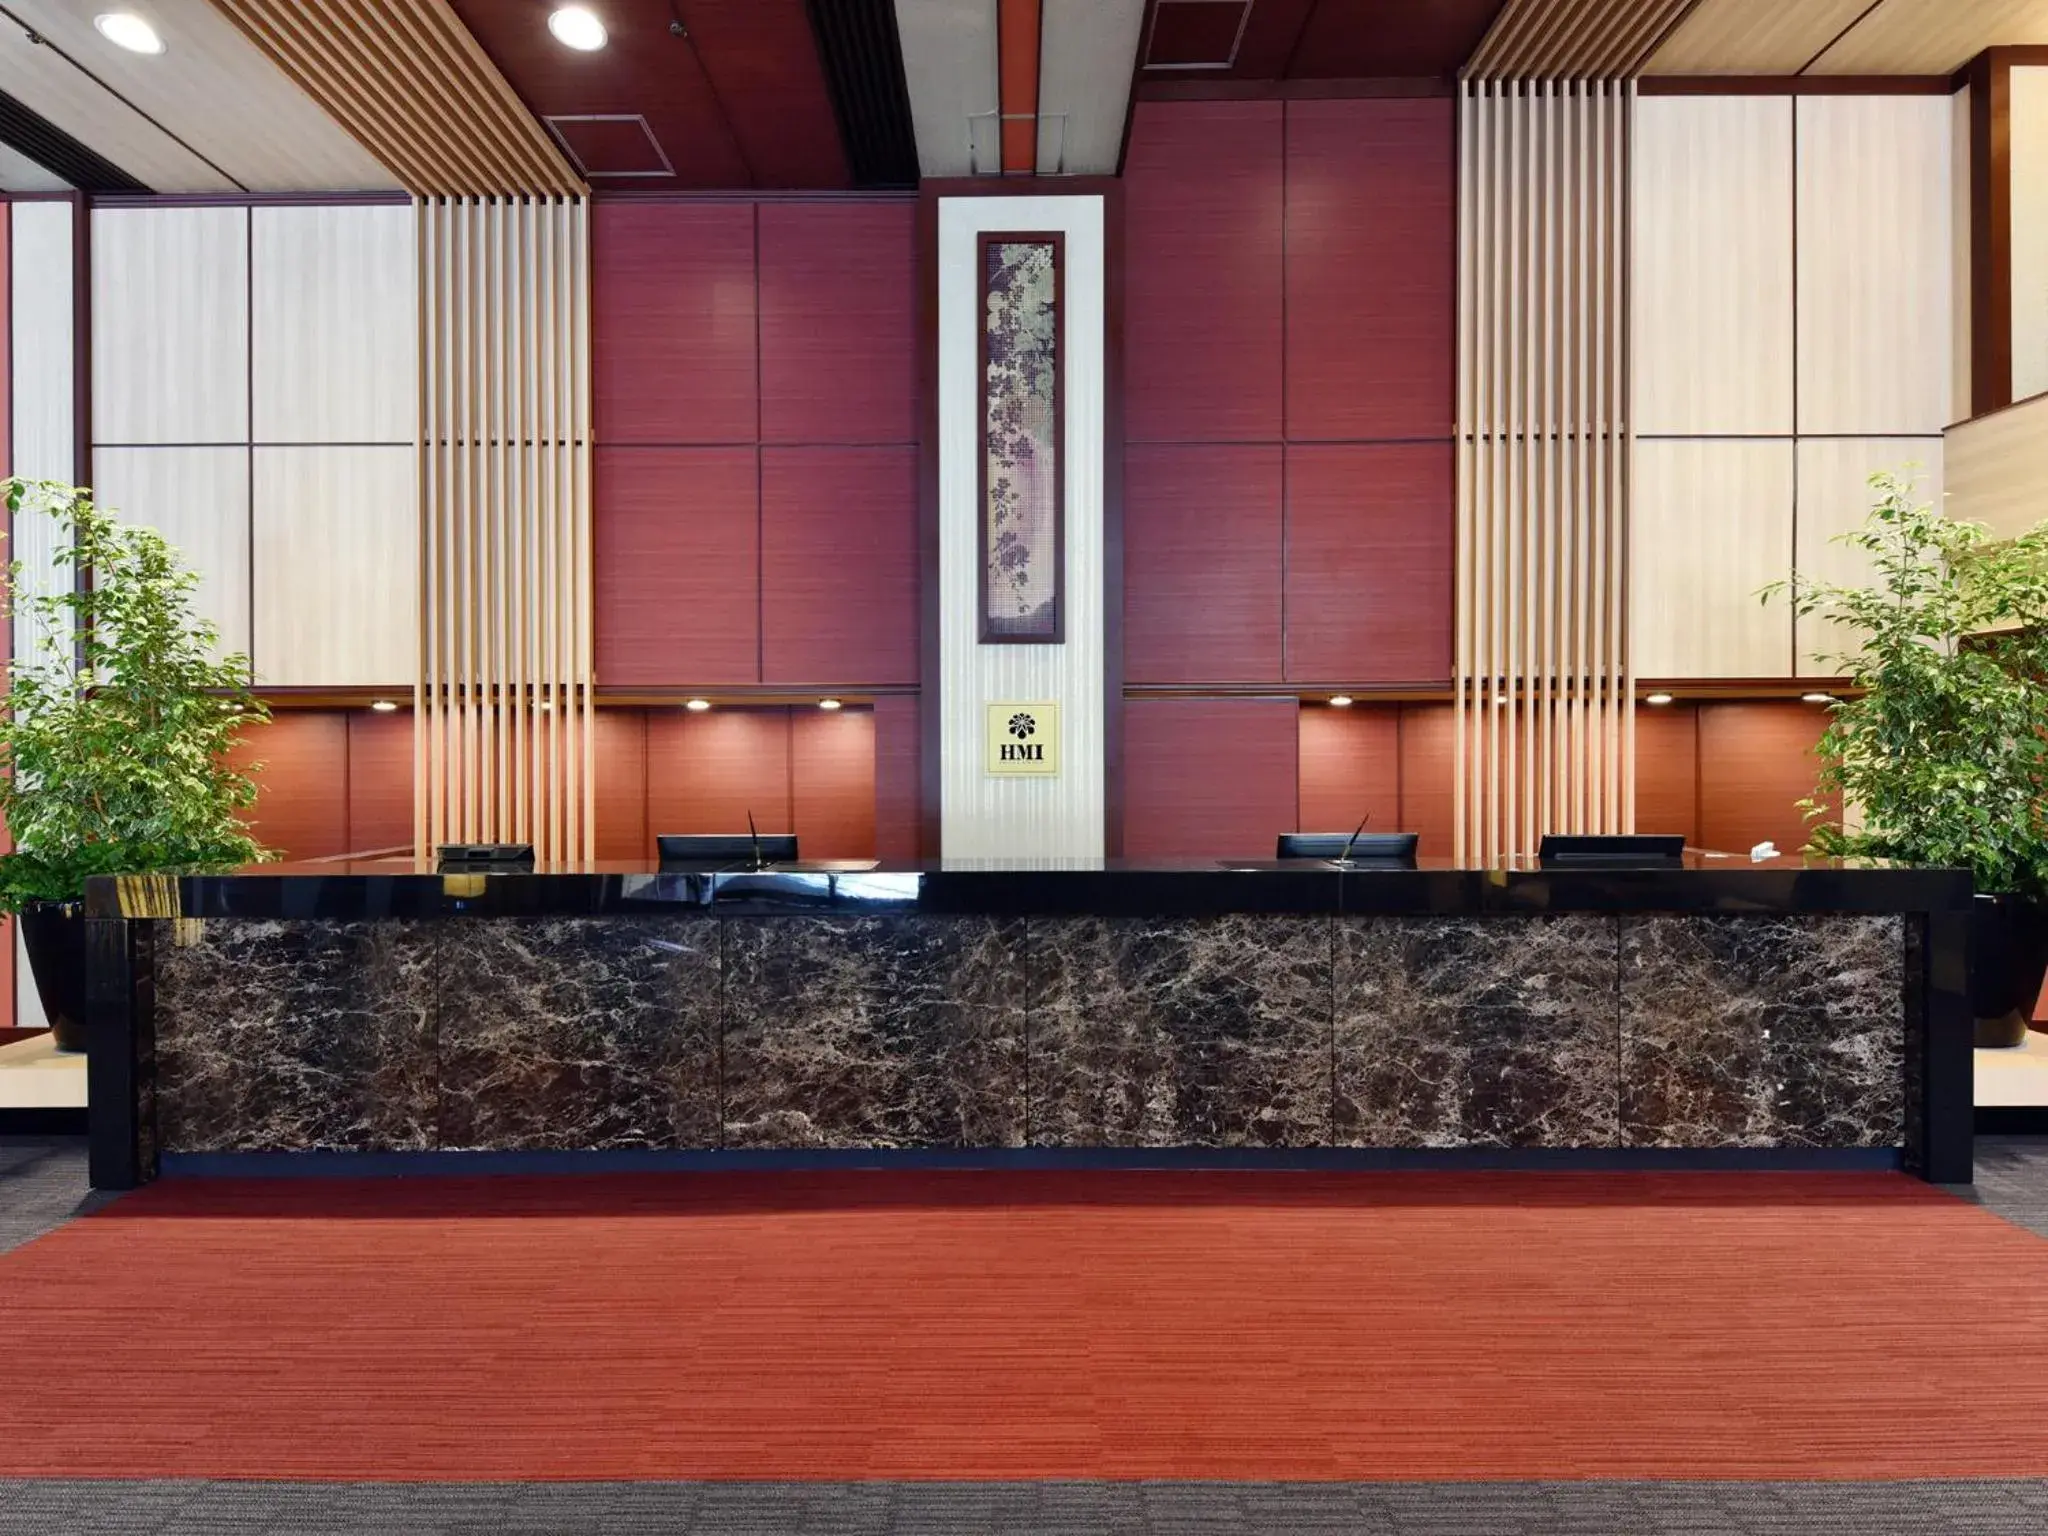 Lobby or reception in Hotel Heian No Mori